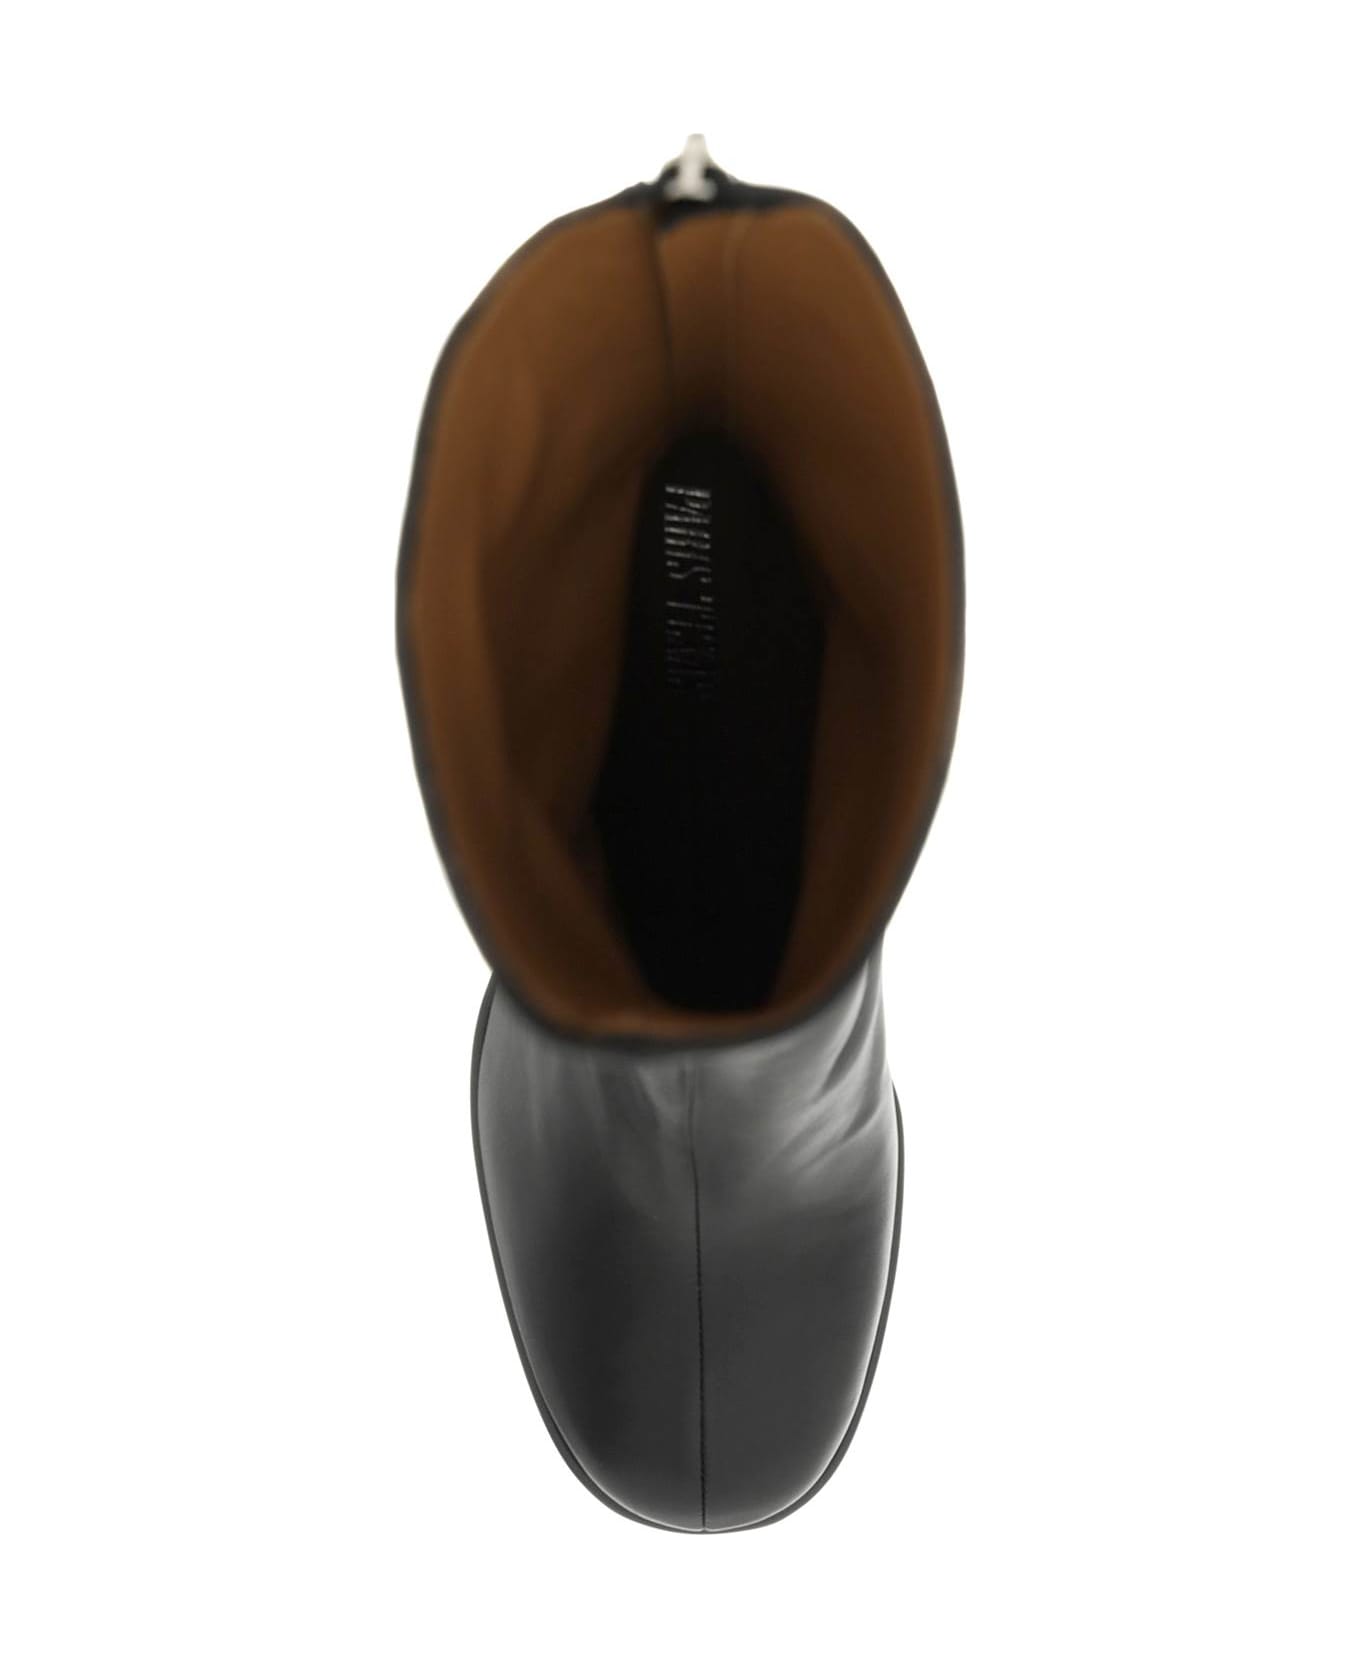 Paris Texas Nappa Leather 'lexy' Ankle Boots - Black Diamond